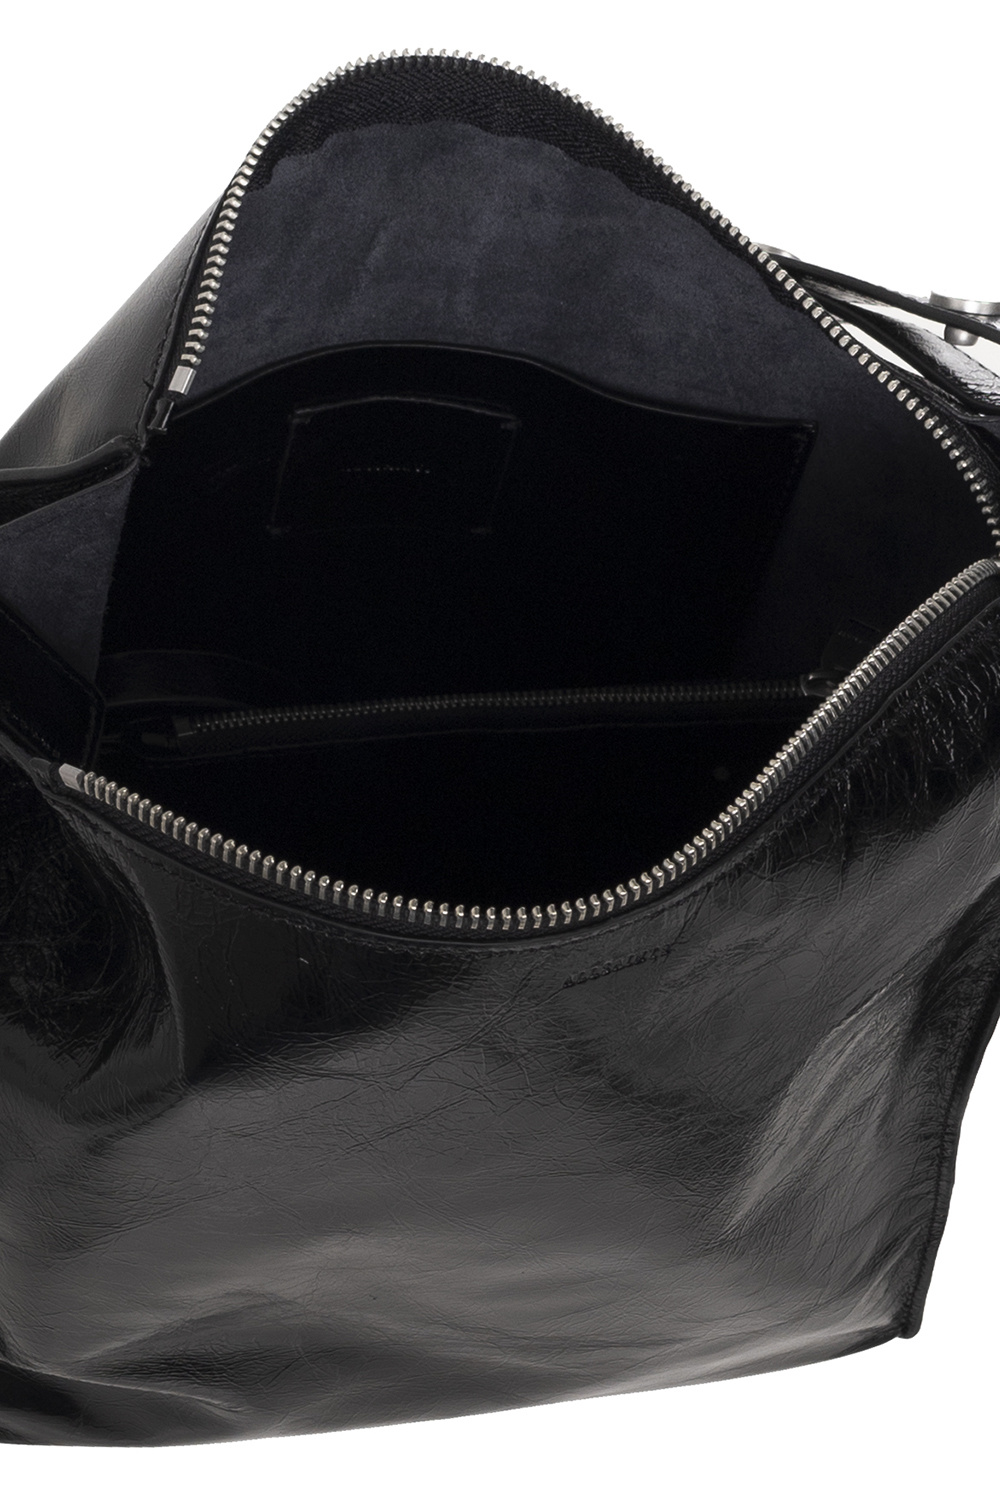 AllSaints ‘Kita’ shopper strap bag